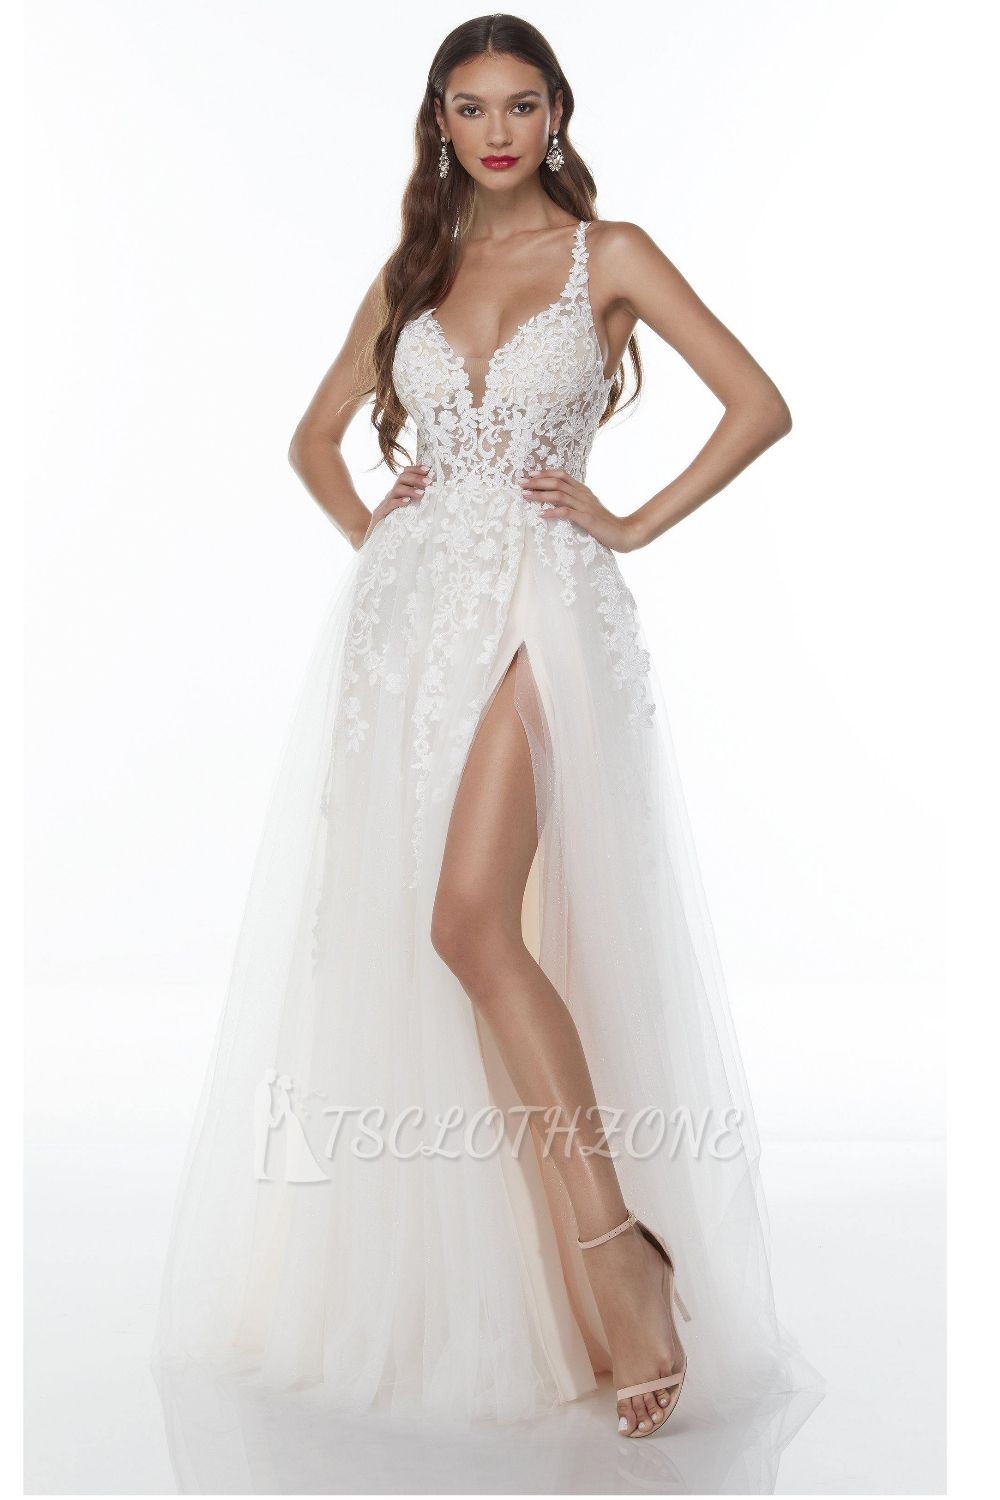 Spaghetti Straps Lace Wedding Gowns Side Split V Neck Bride Dress